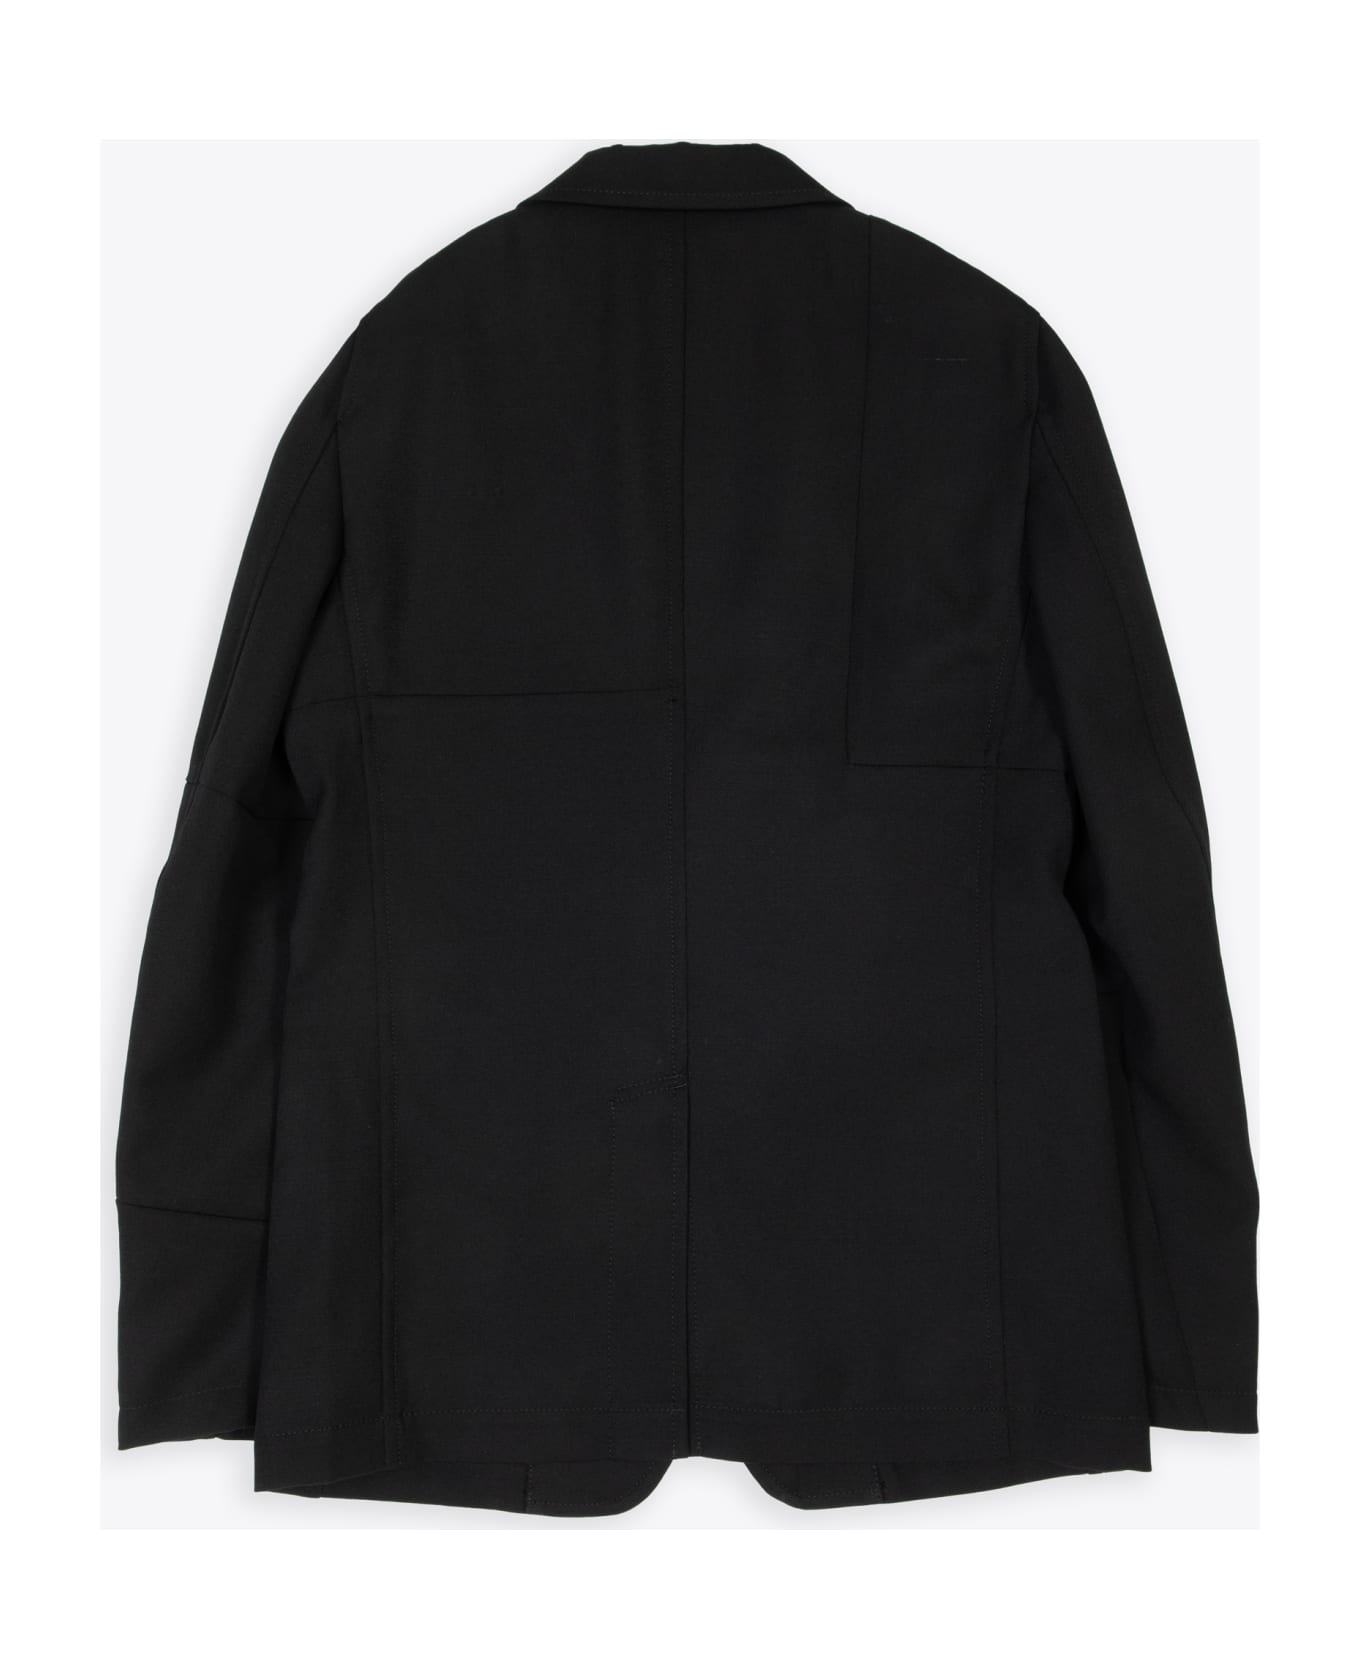 Comme des Garçons Shirt Mens Jacket Woven Black wool patchwork blazer with peak lapel - Nero